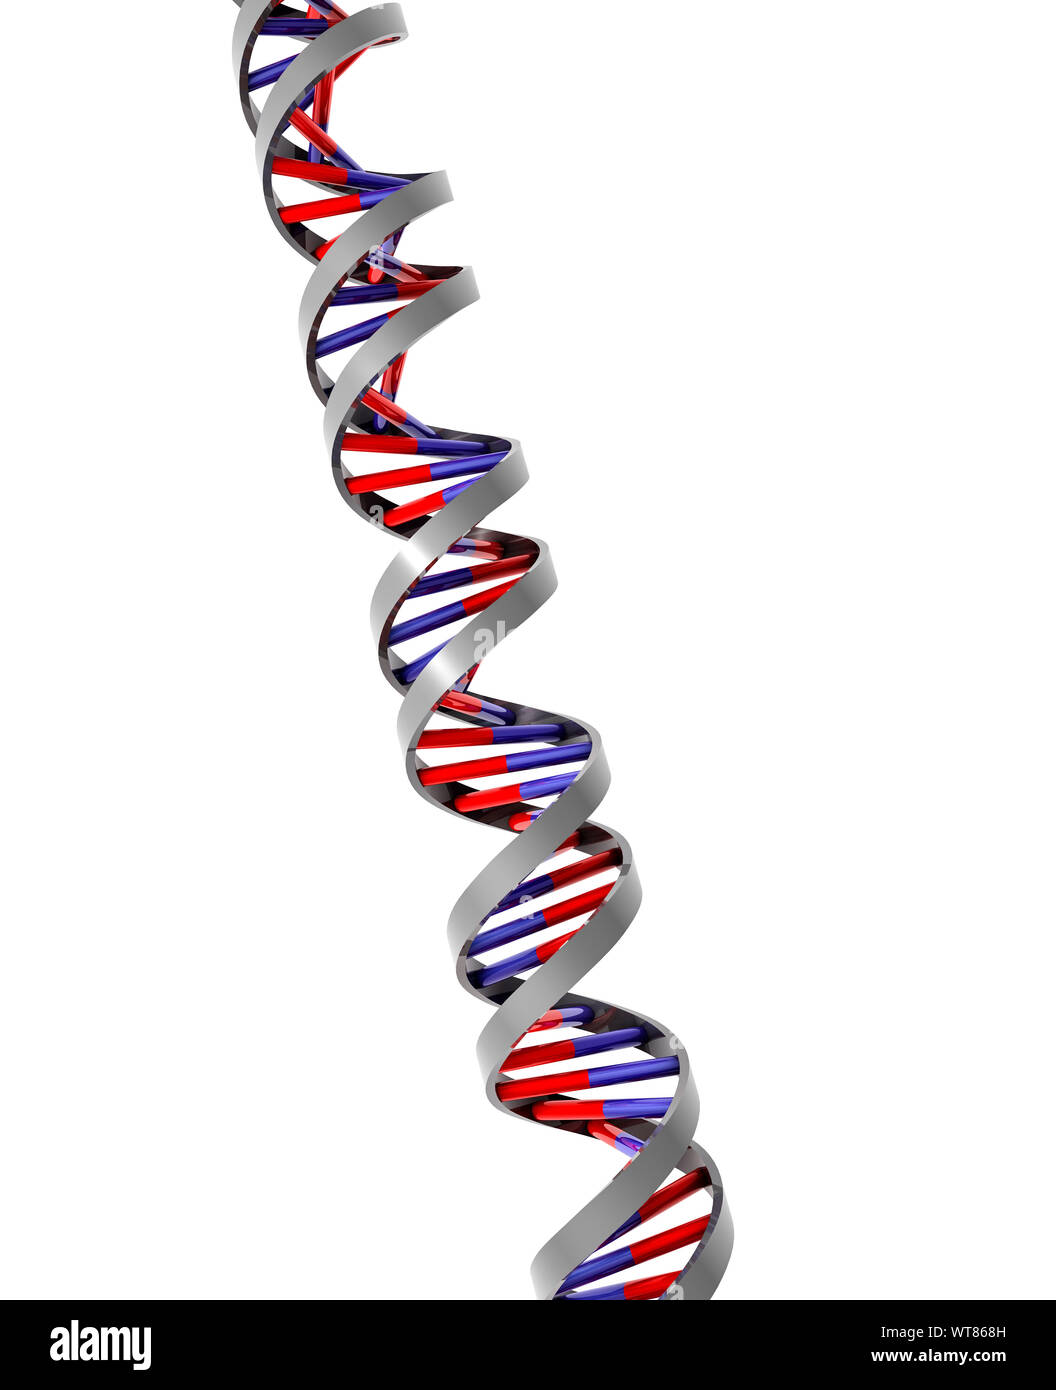 DNA-Doppelhelix molekulare Ausrichtung Modell Stockfoto